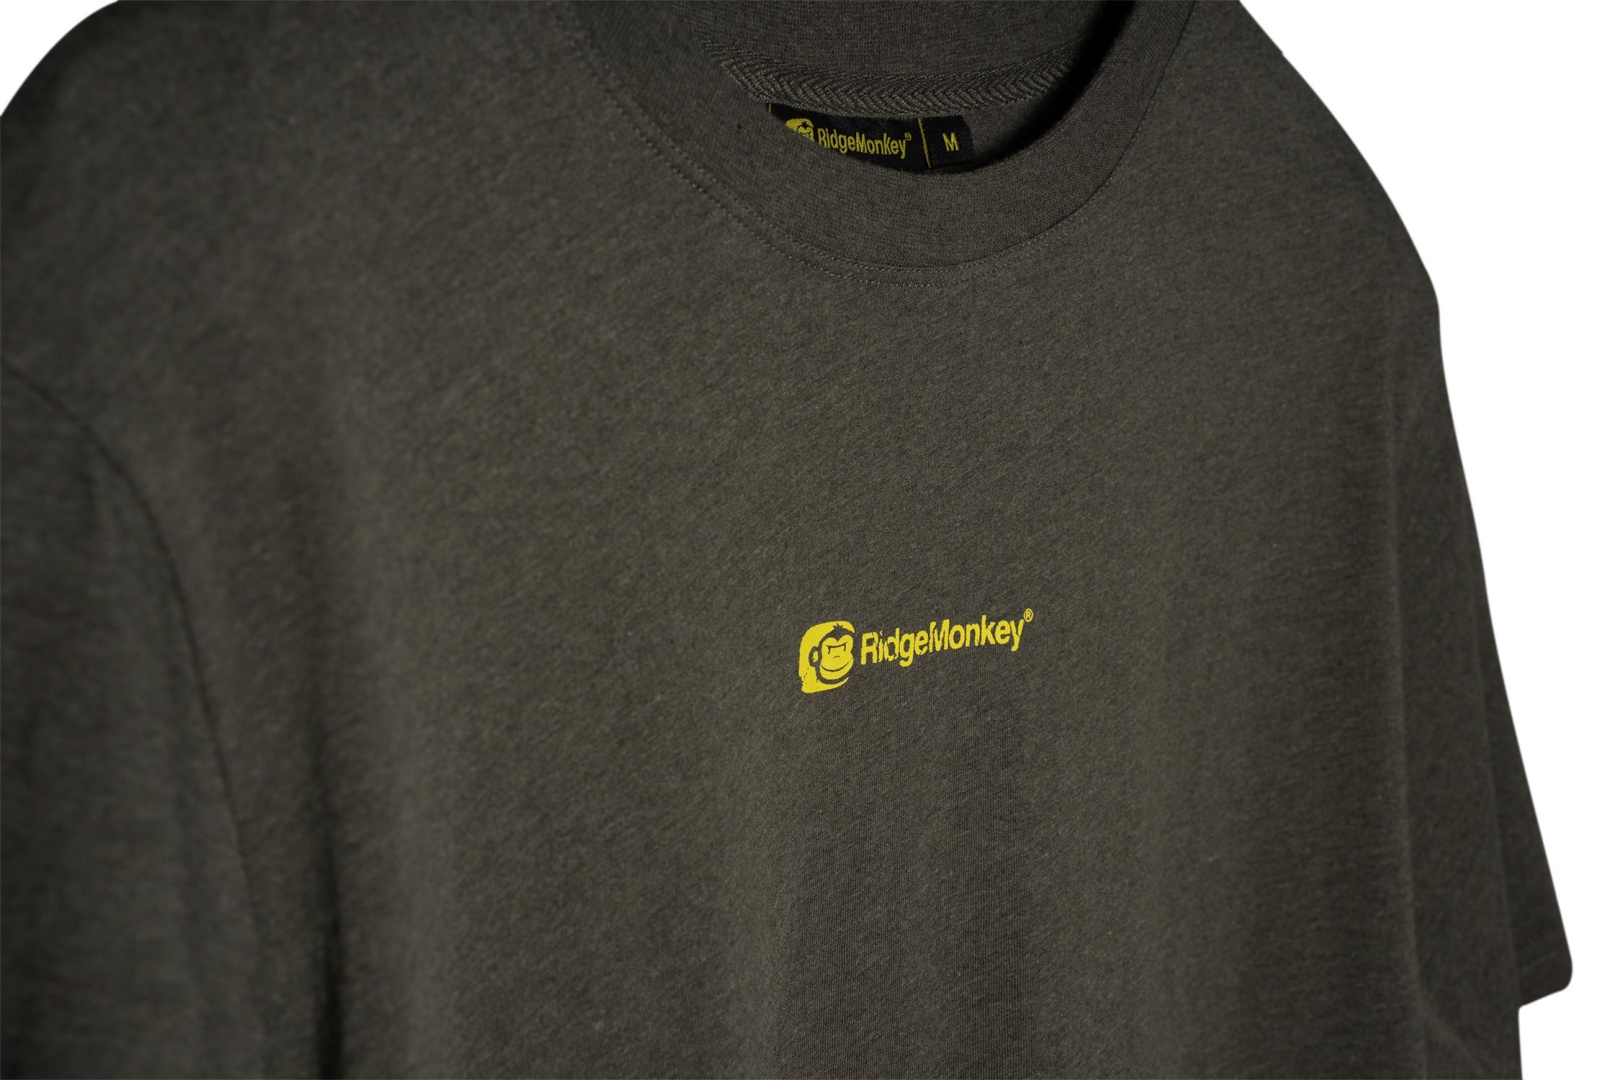 RidgeMonkey APEarel SportFlex Lightweight T-Shirt - Green